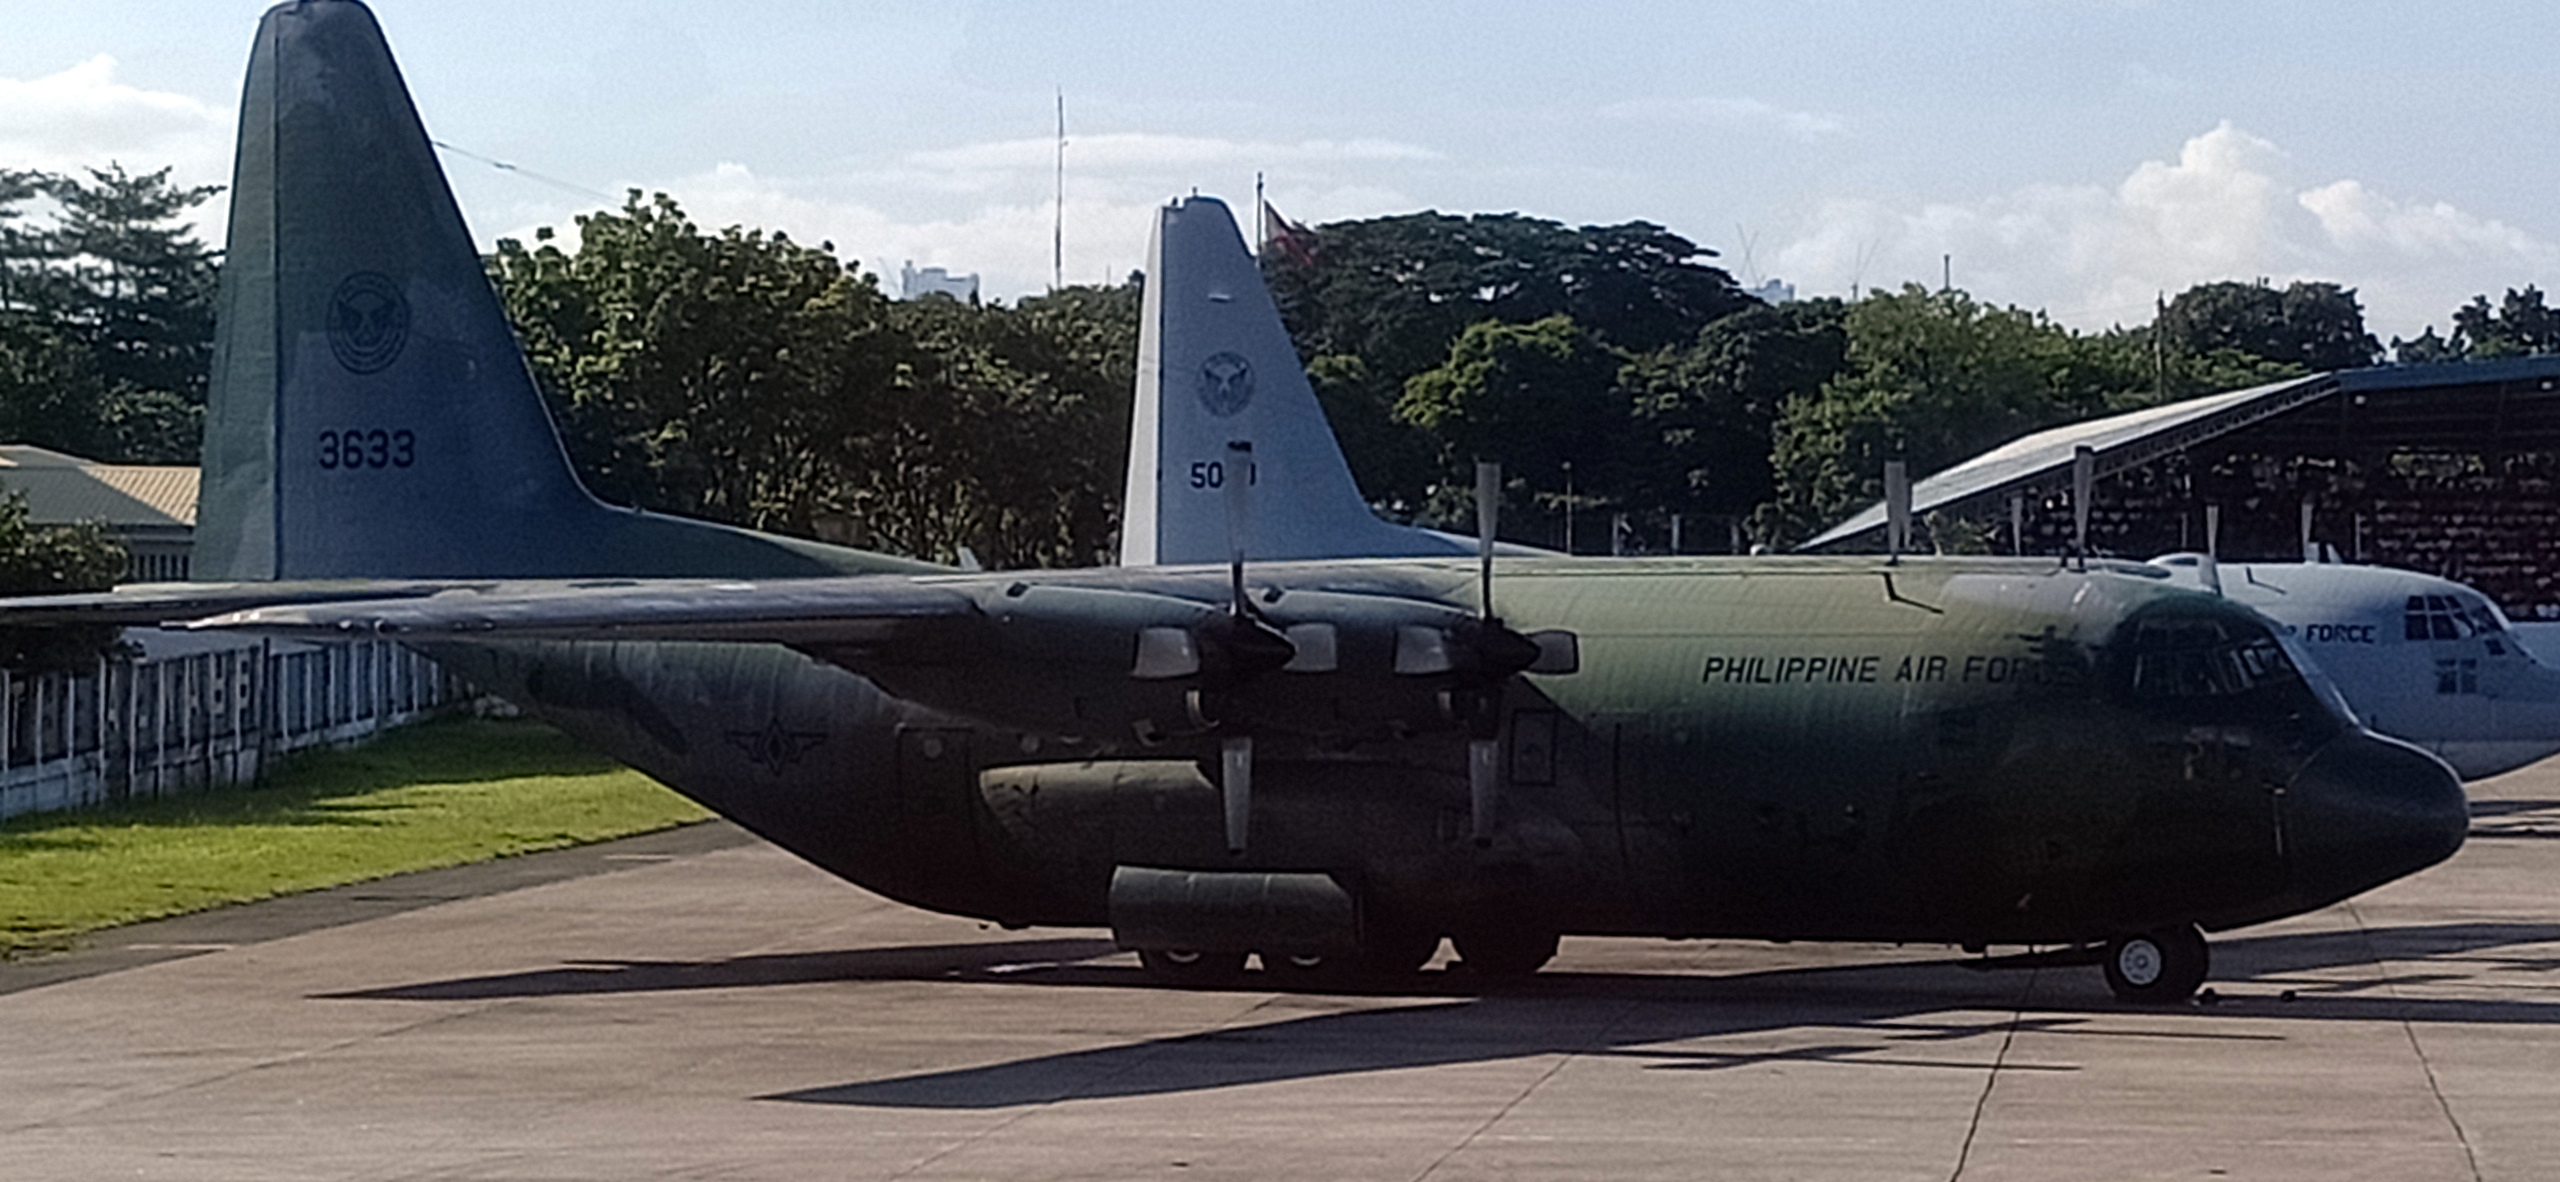 C130 самолет. Philippine Air Force c-130 Hercules. C130 kaf328. Philippine Air Force.